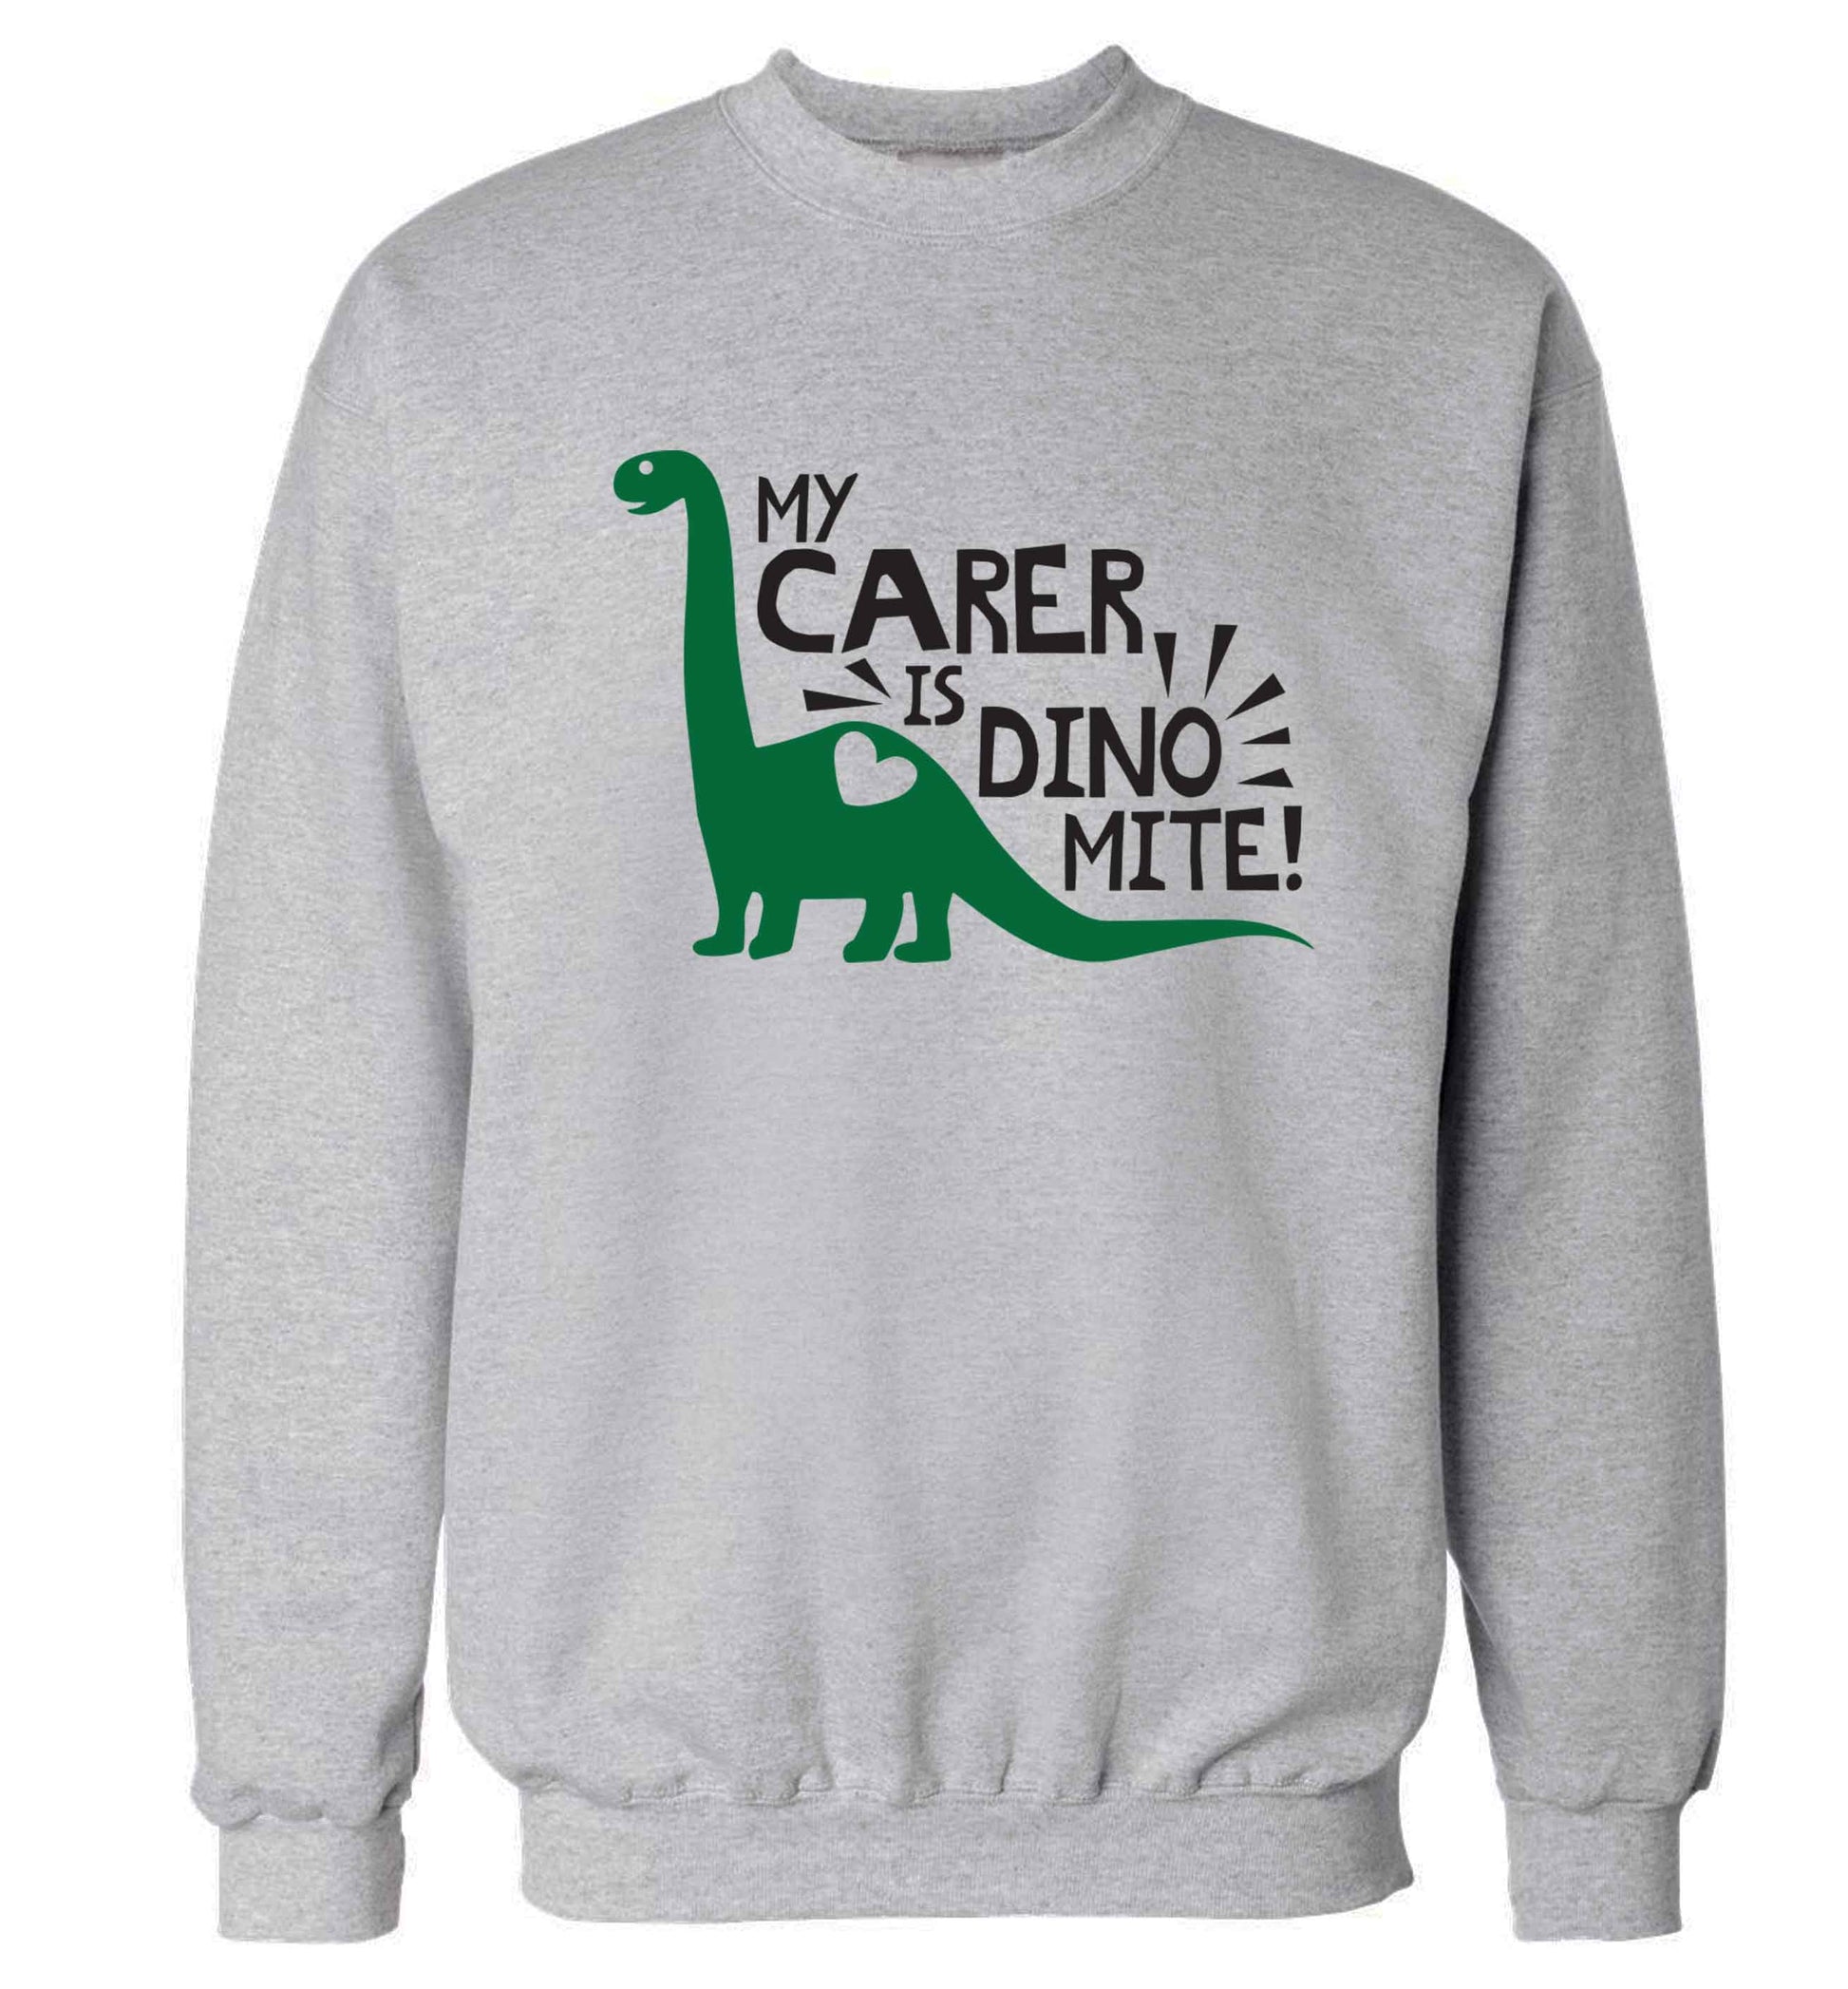 My carer is dinomite! Adult's unisex grey Sweater 2XL